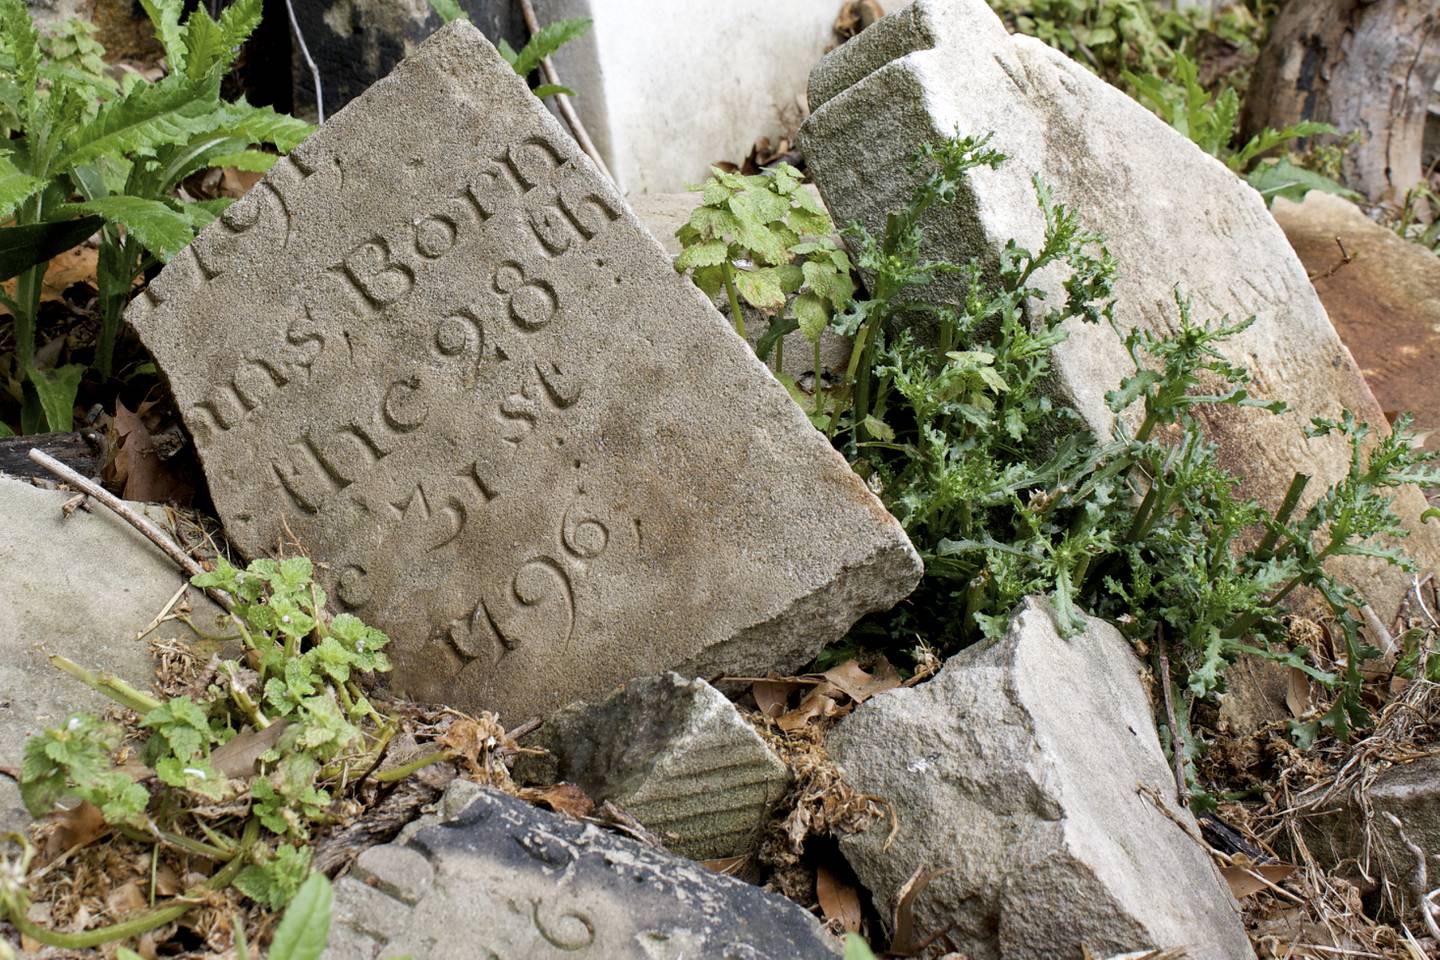 Broken gravestones at Old Saint Paul’s Cemetery in Baltimore City.